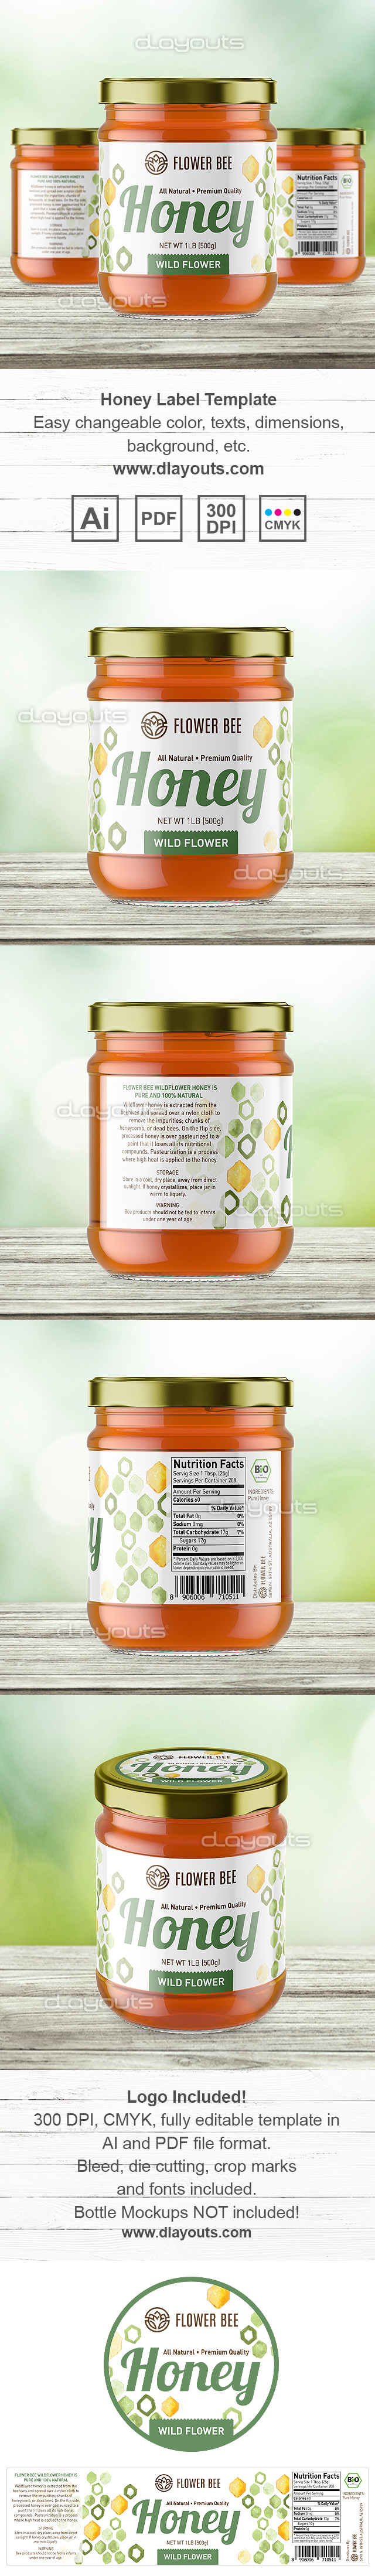 Wild Flower Honey Label Template